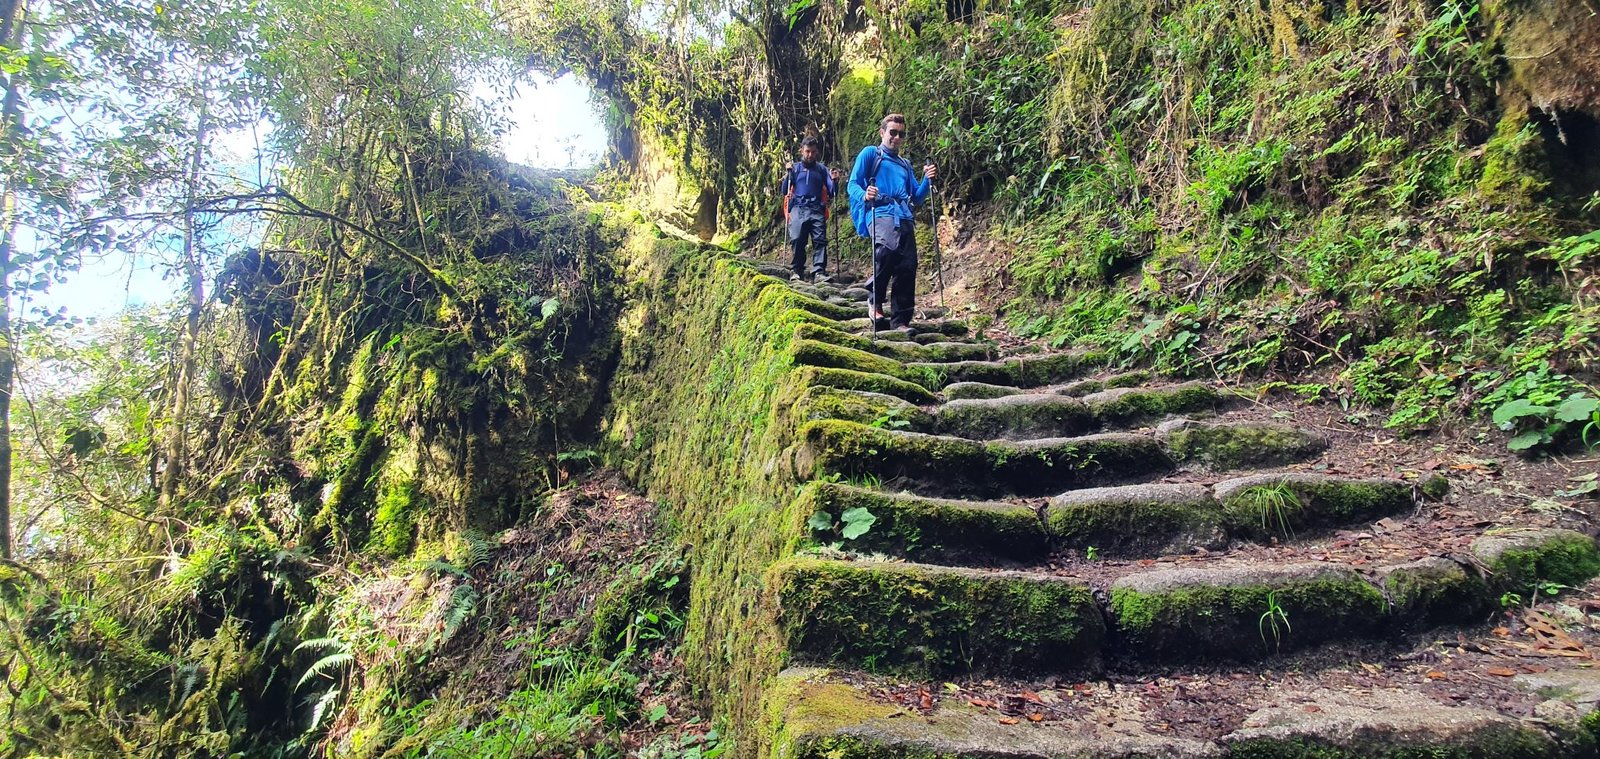 Inca Trail to Machu Picchu 4 daysPhoto #2 